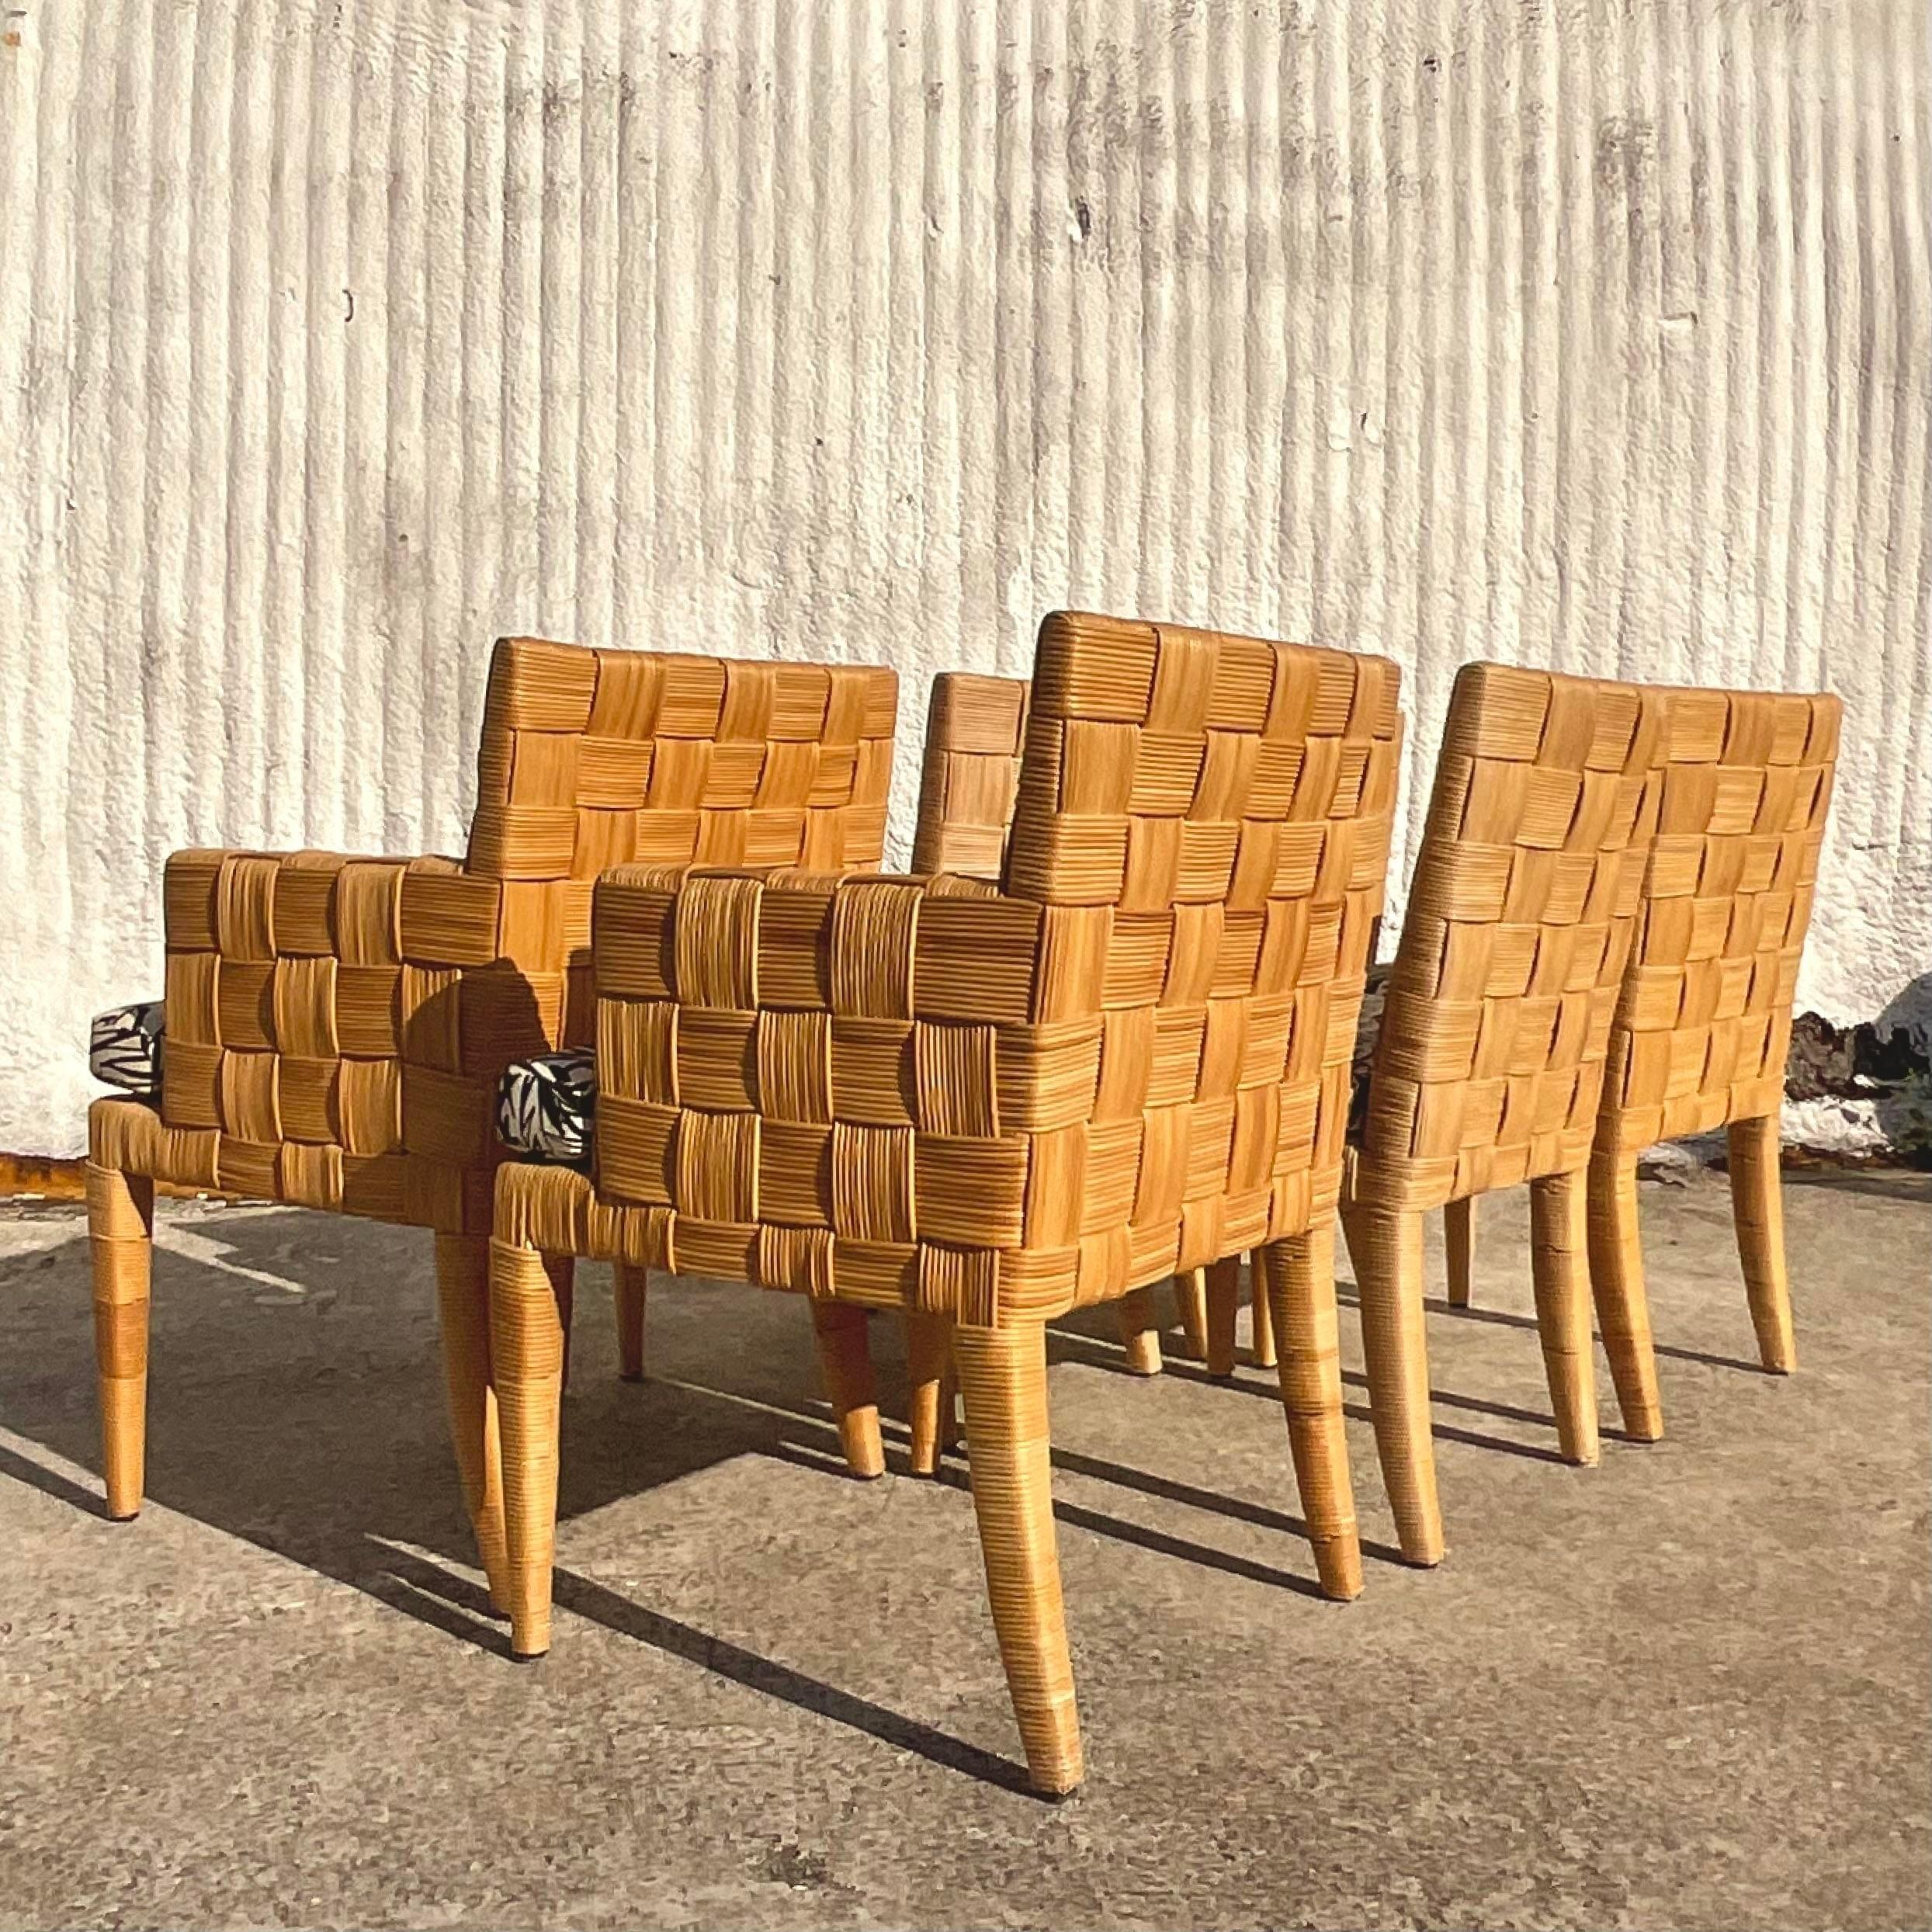 Philippine Vintage Coastal Donghia “Block Island” Woven Rattan Chairs - Set of 6